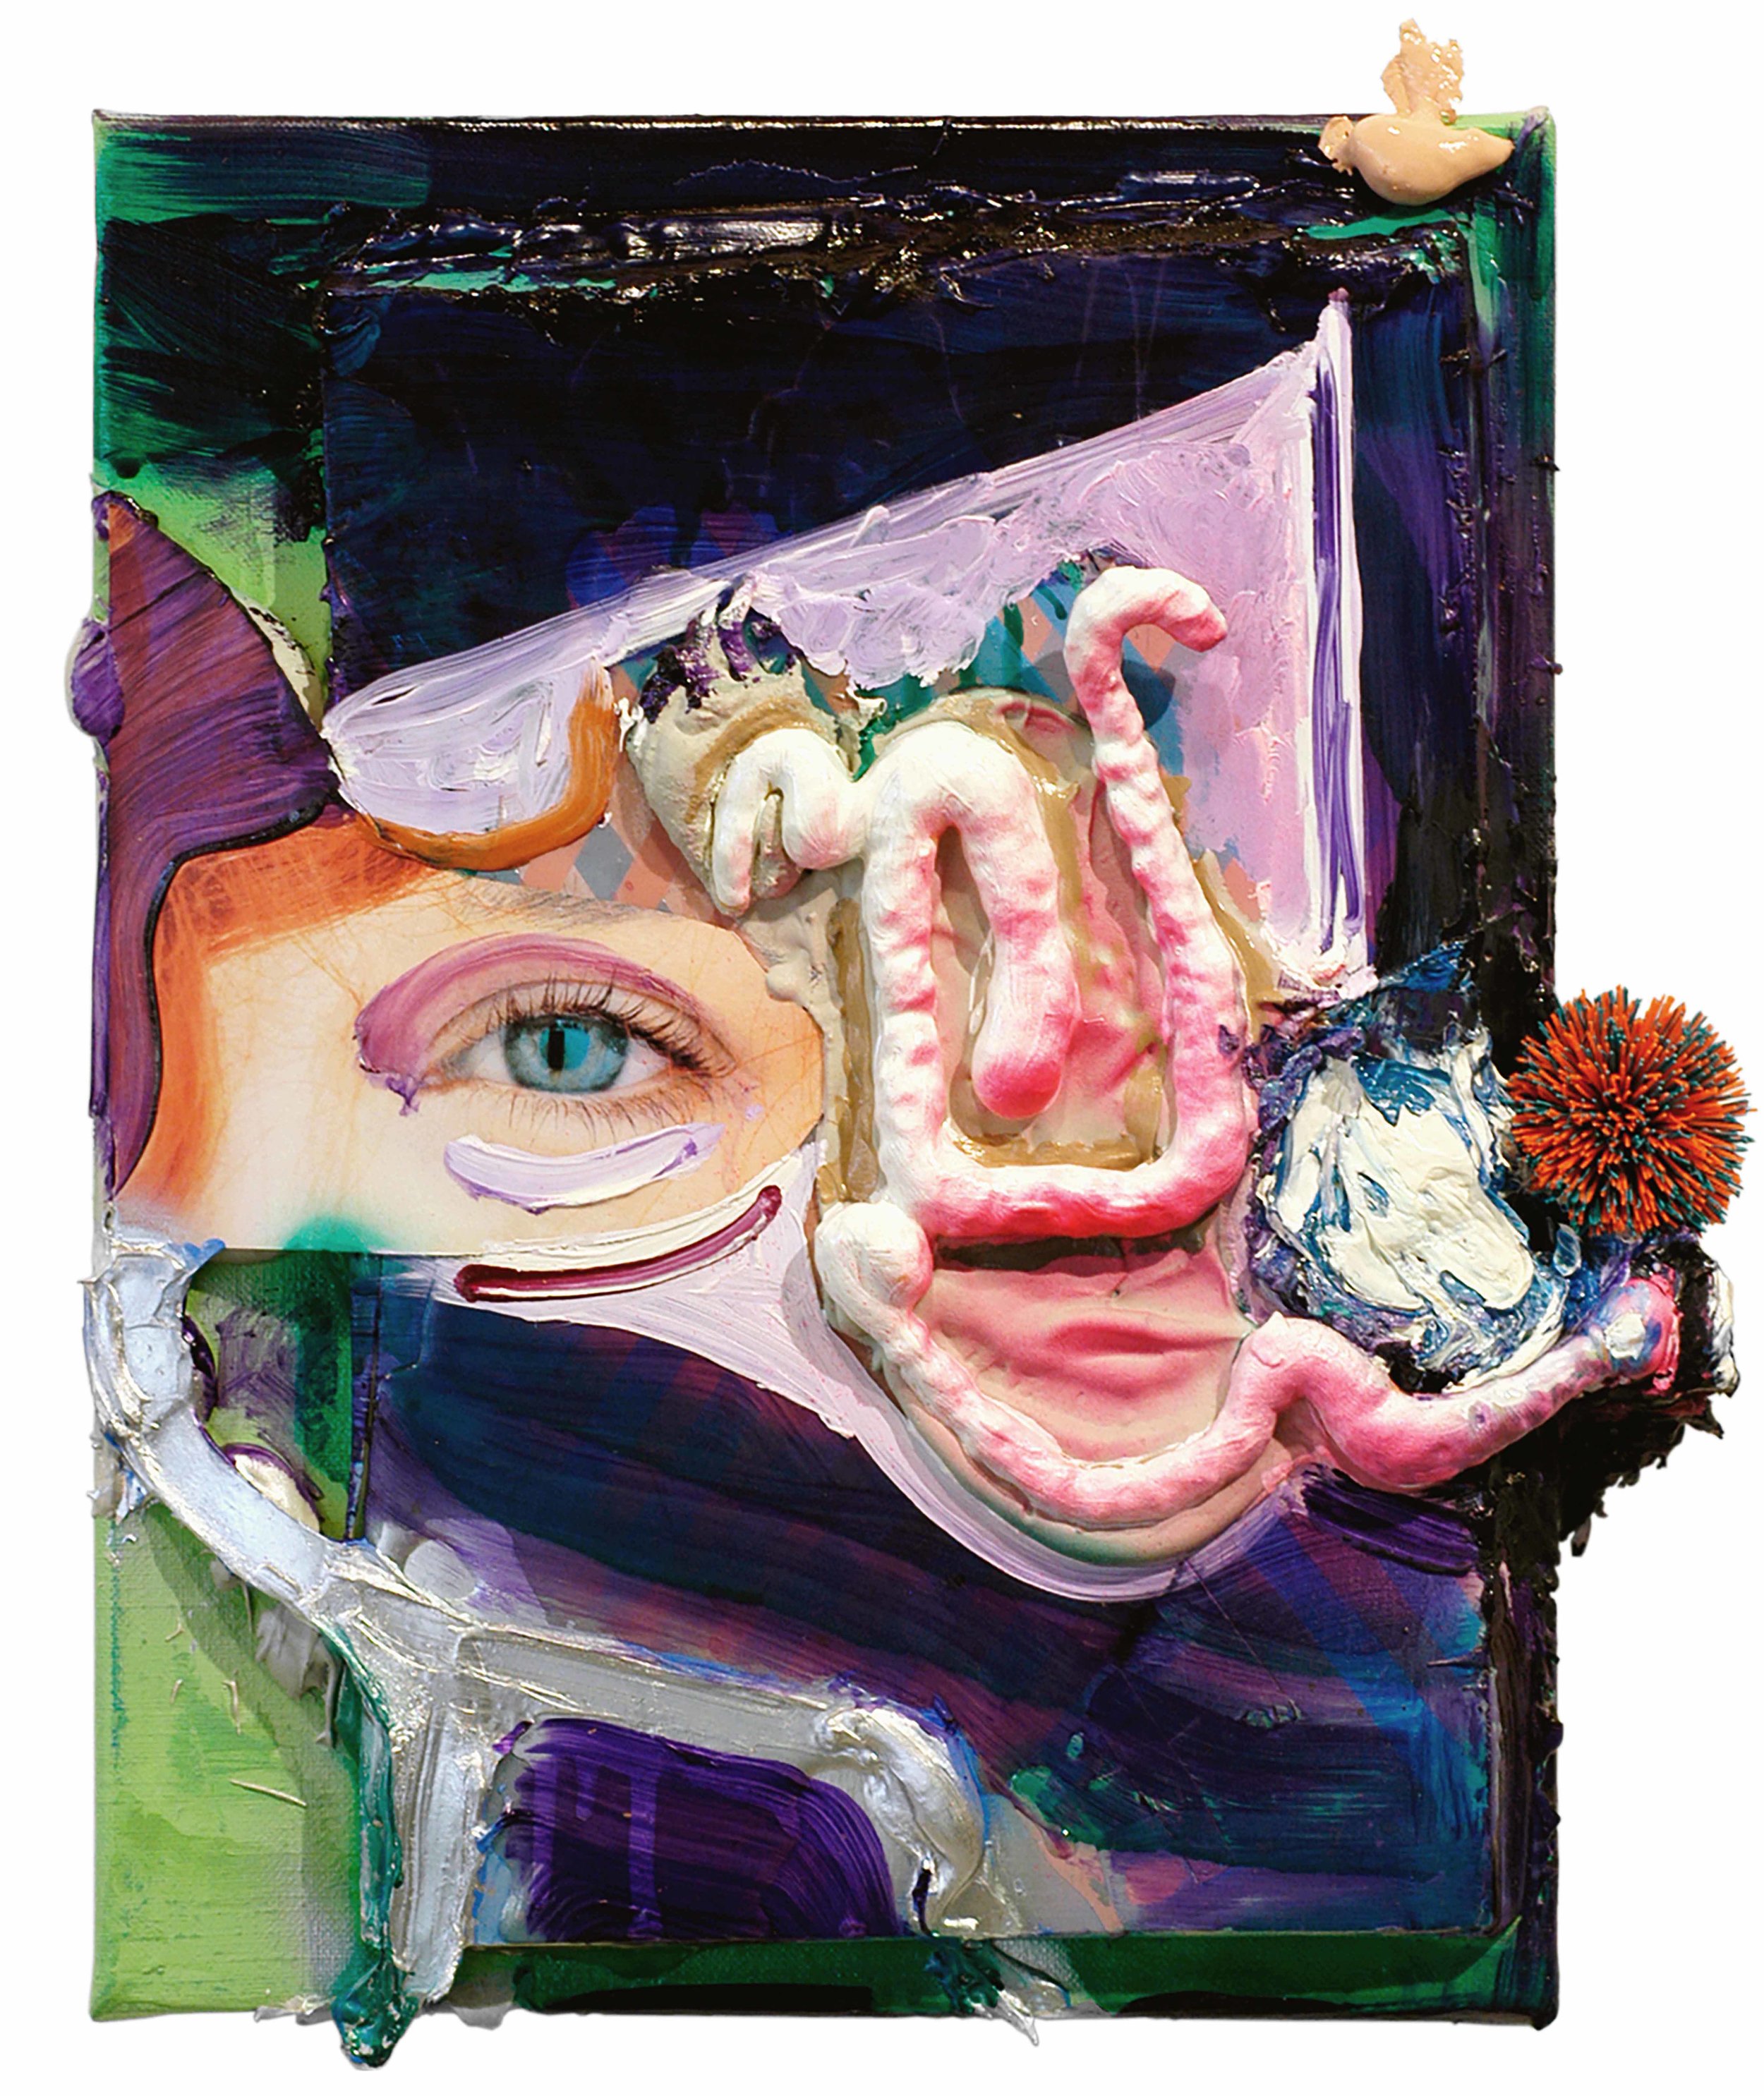  Drew Beattie  Sad Man Wants to Talk &nbsp; 2005 oil, acrylic, spray paint, bondo, collage, rubber, insulating foam and foam core on canvas 14½ x 11½ inches 